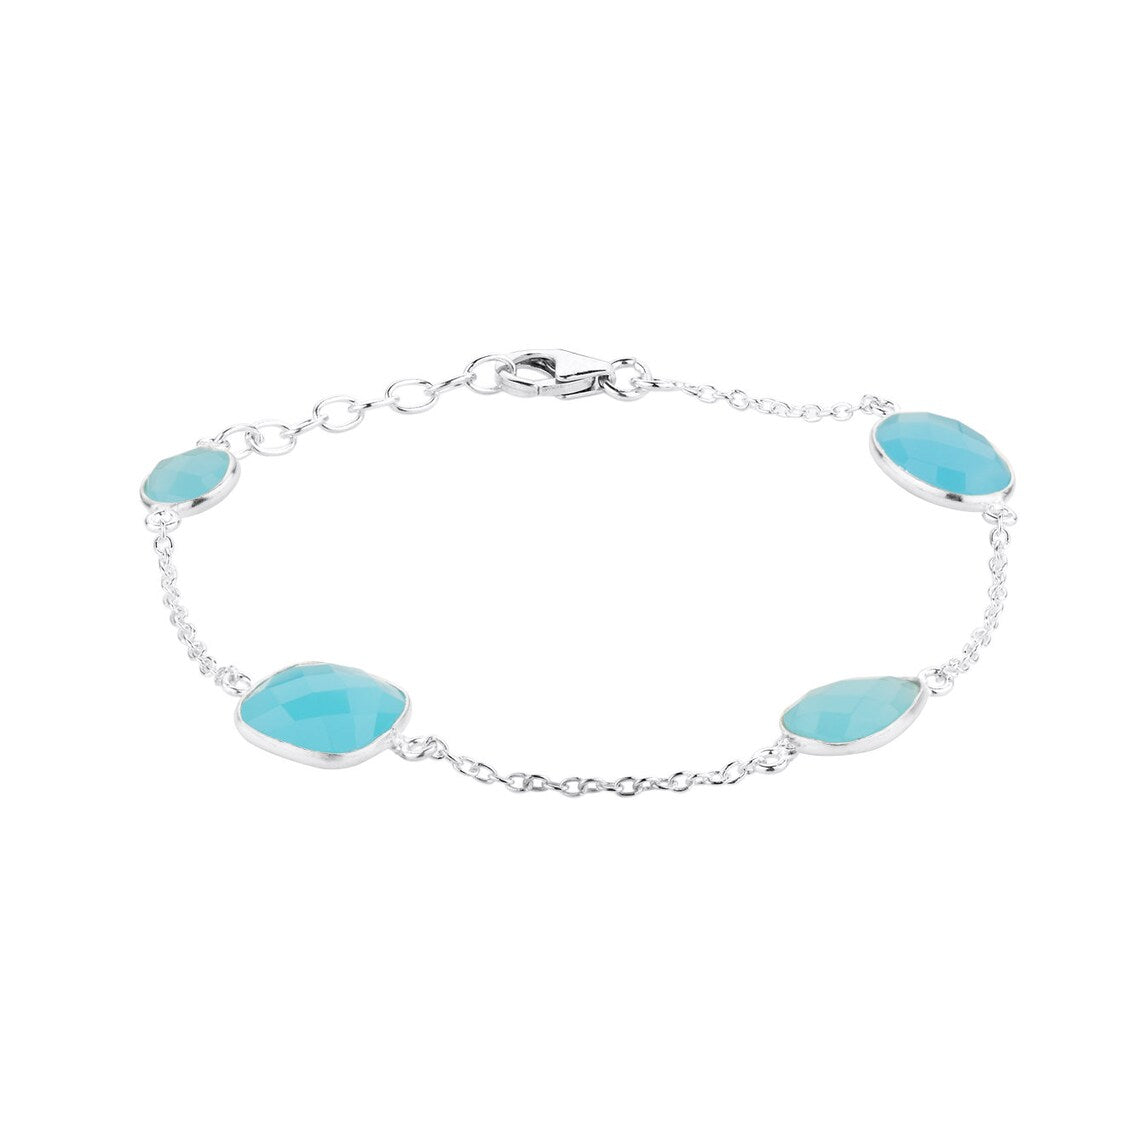 Blue Chalcedony Sterling Silver Bracelet Multi Shape like Pear, Cushion, Round Stone Bracelet